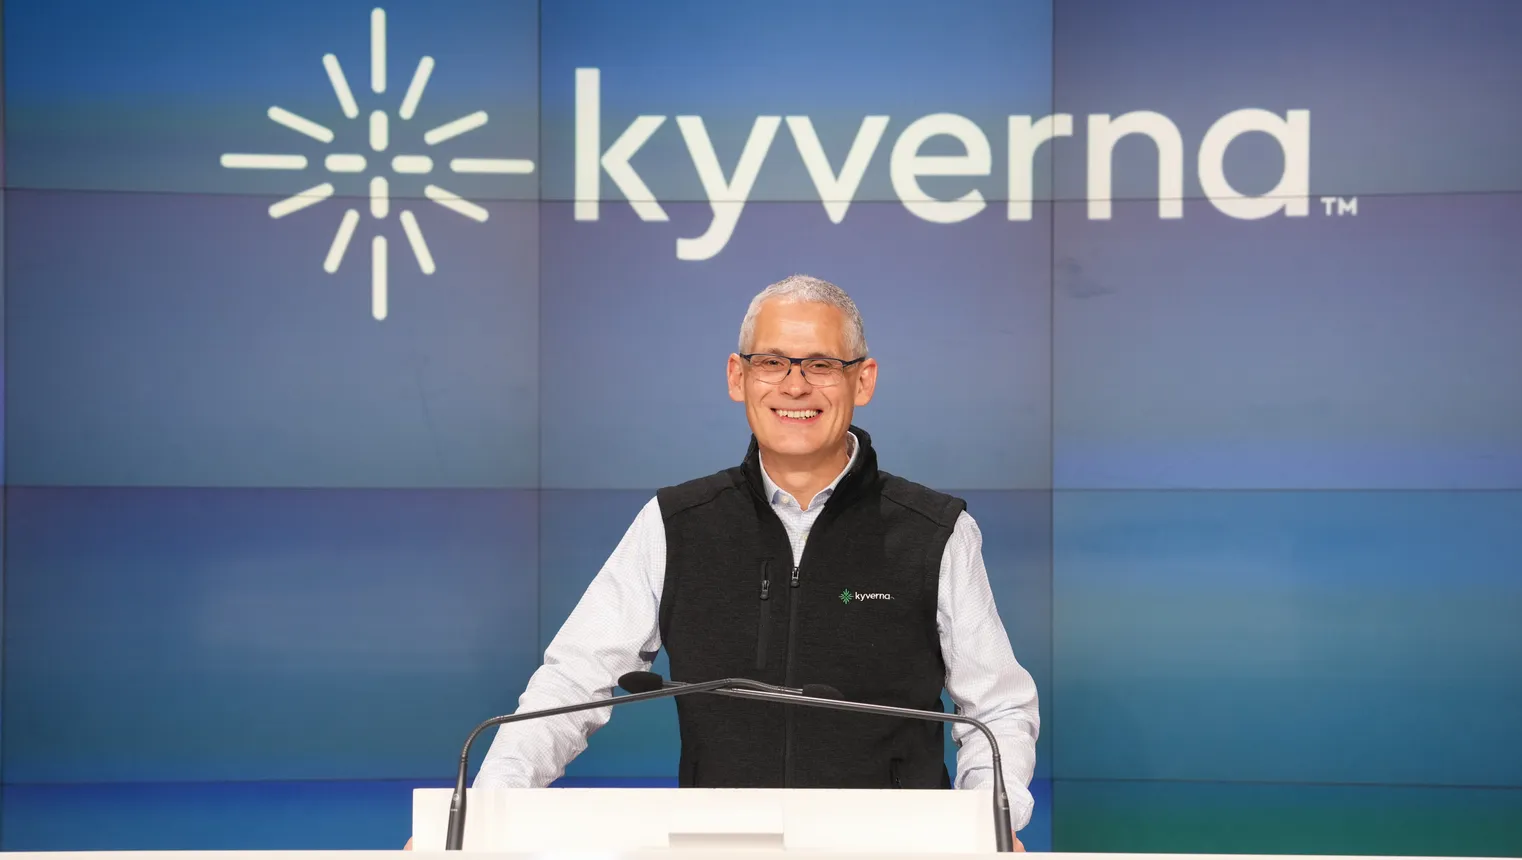 A photo of Kyverna CEO Peter Maag